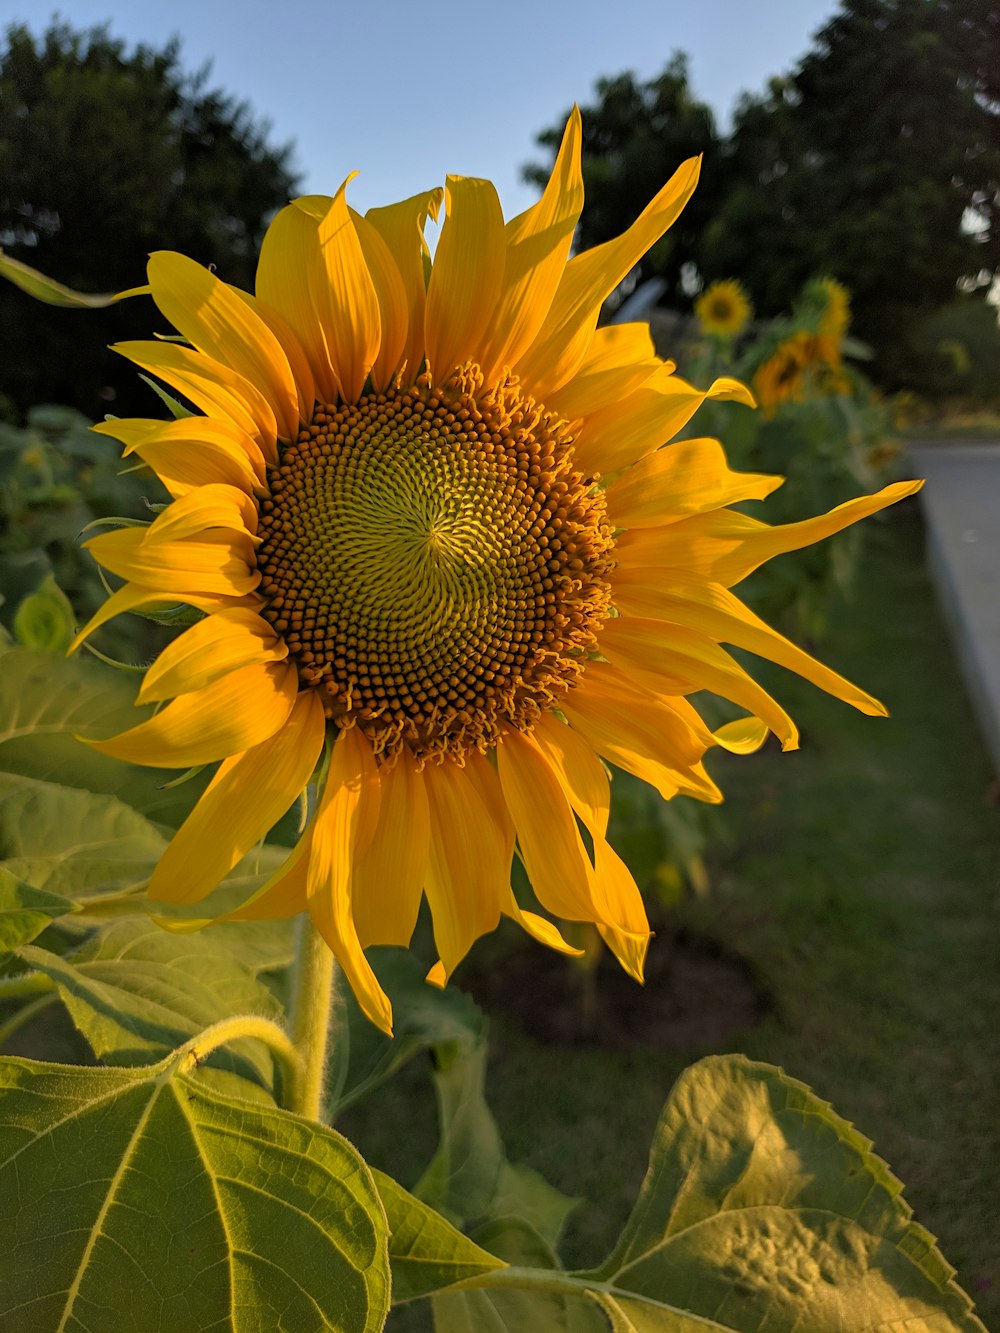 sunflowers near road